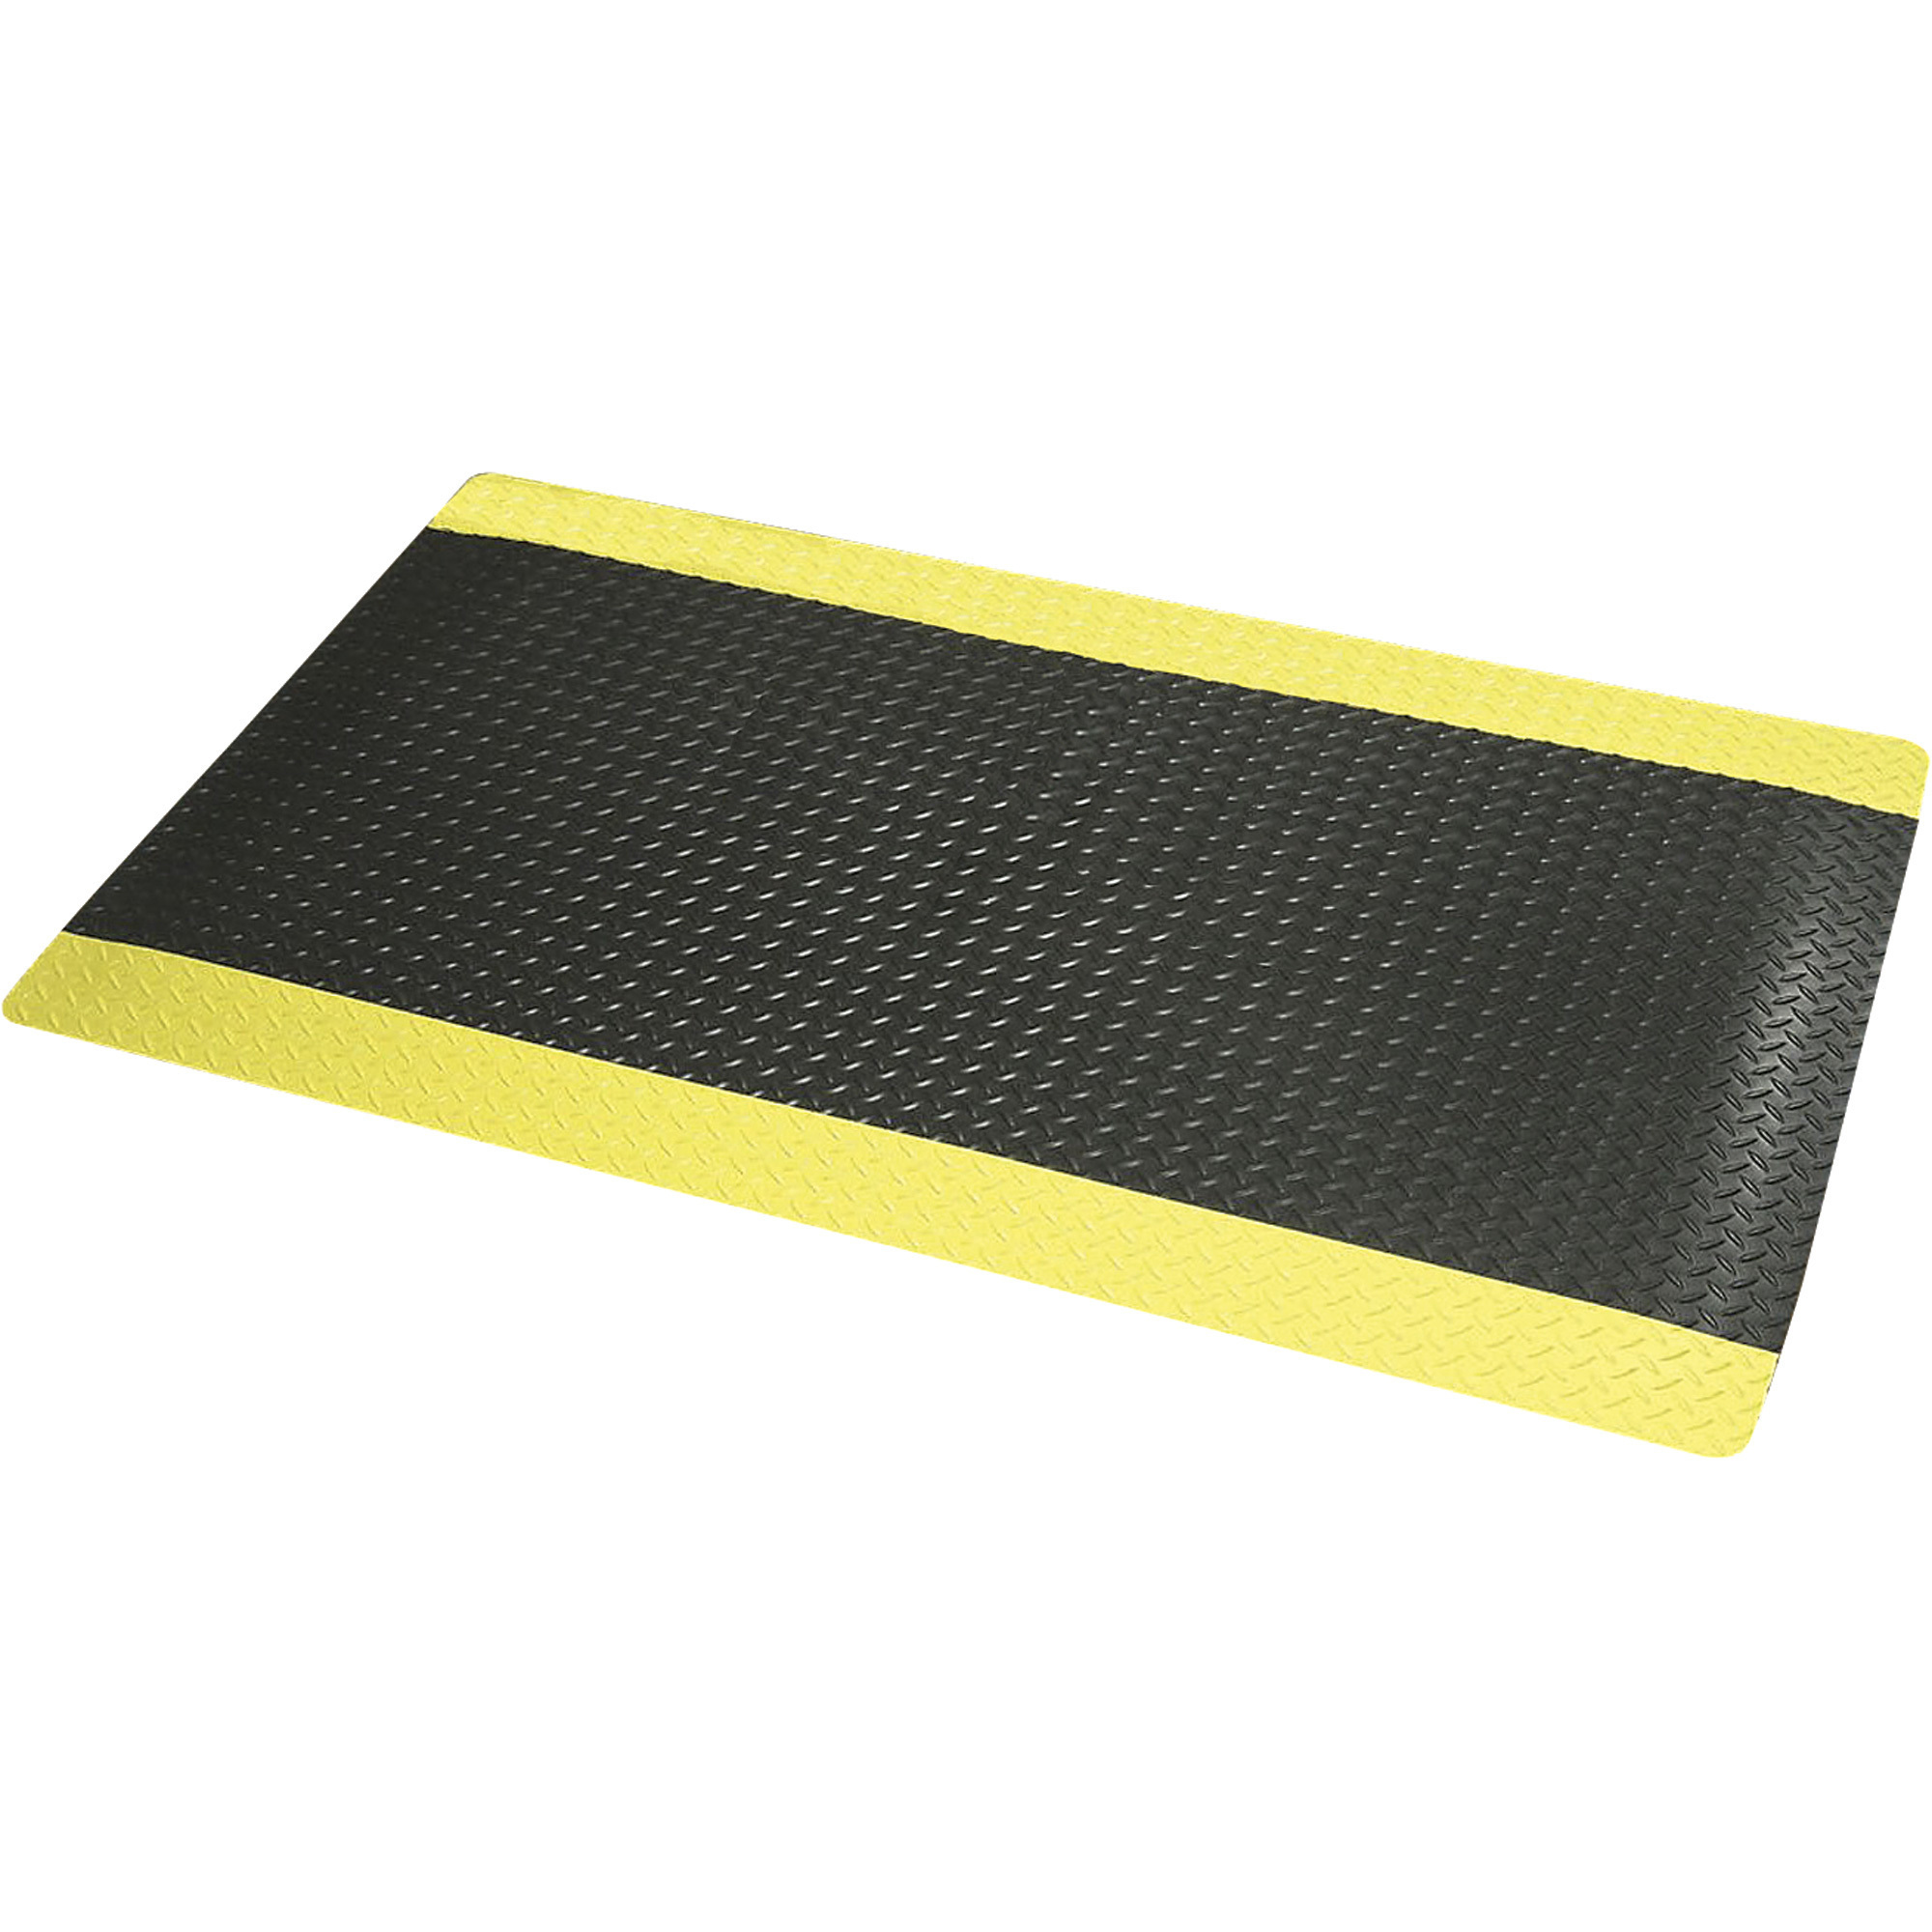 NoTrax Cushion Trax Ultra Floor Mat â 2ft. x 3ft., Black/Yellow, Model 975S0023YB